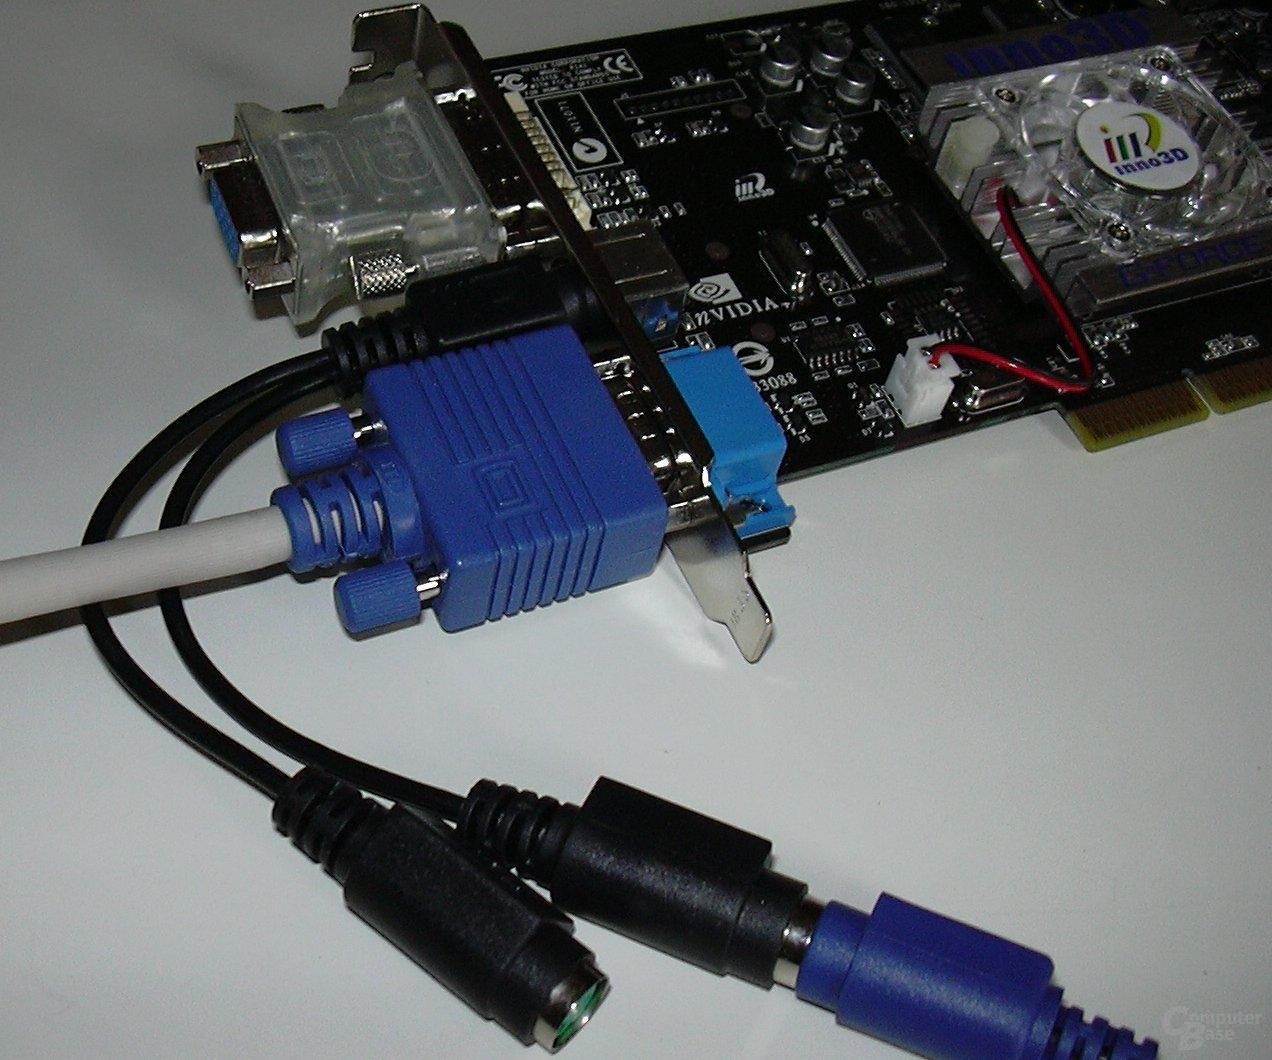 FX5600 - Display Connectors Populated